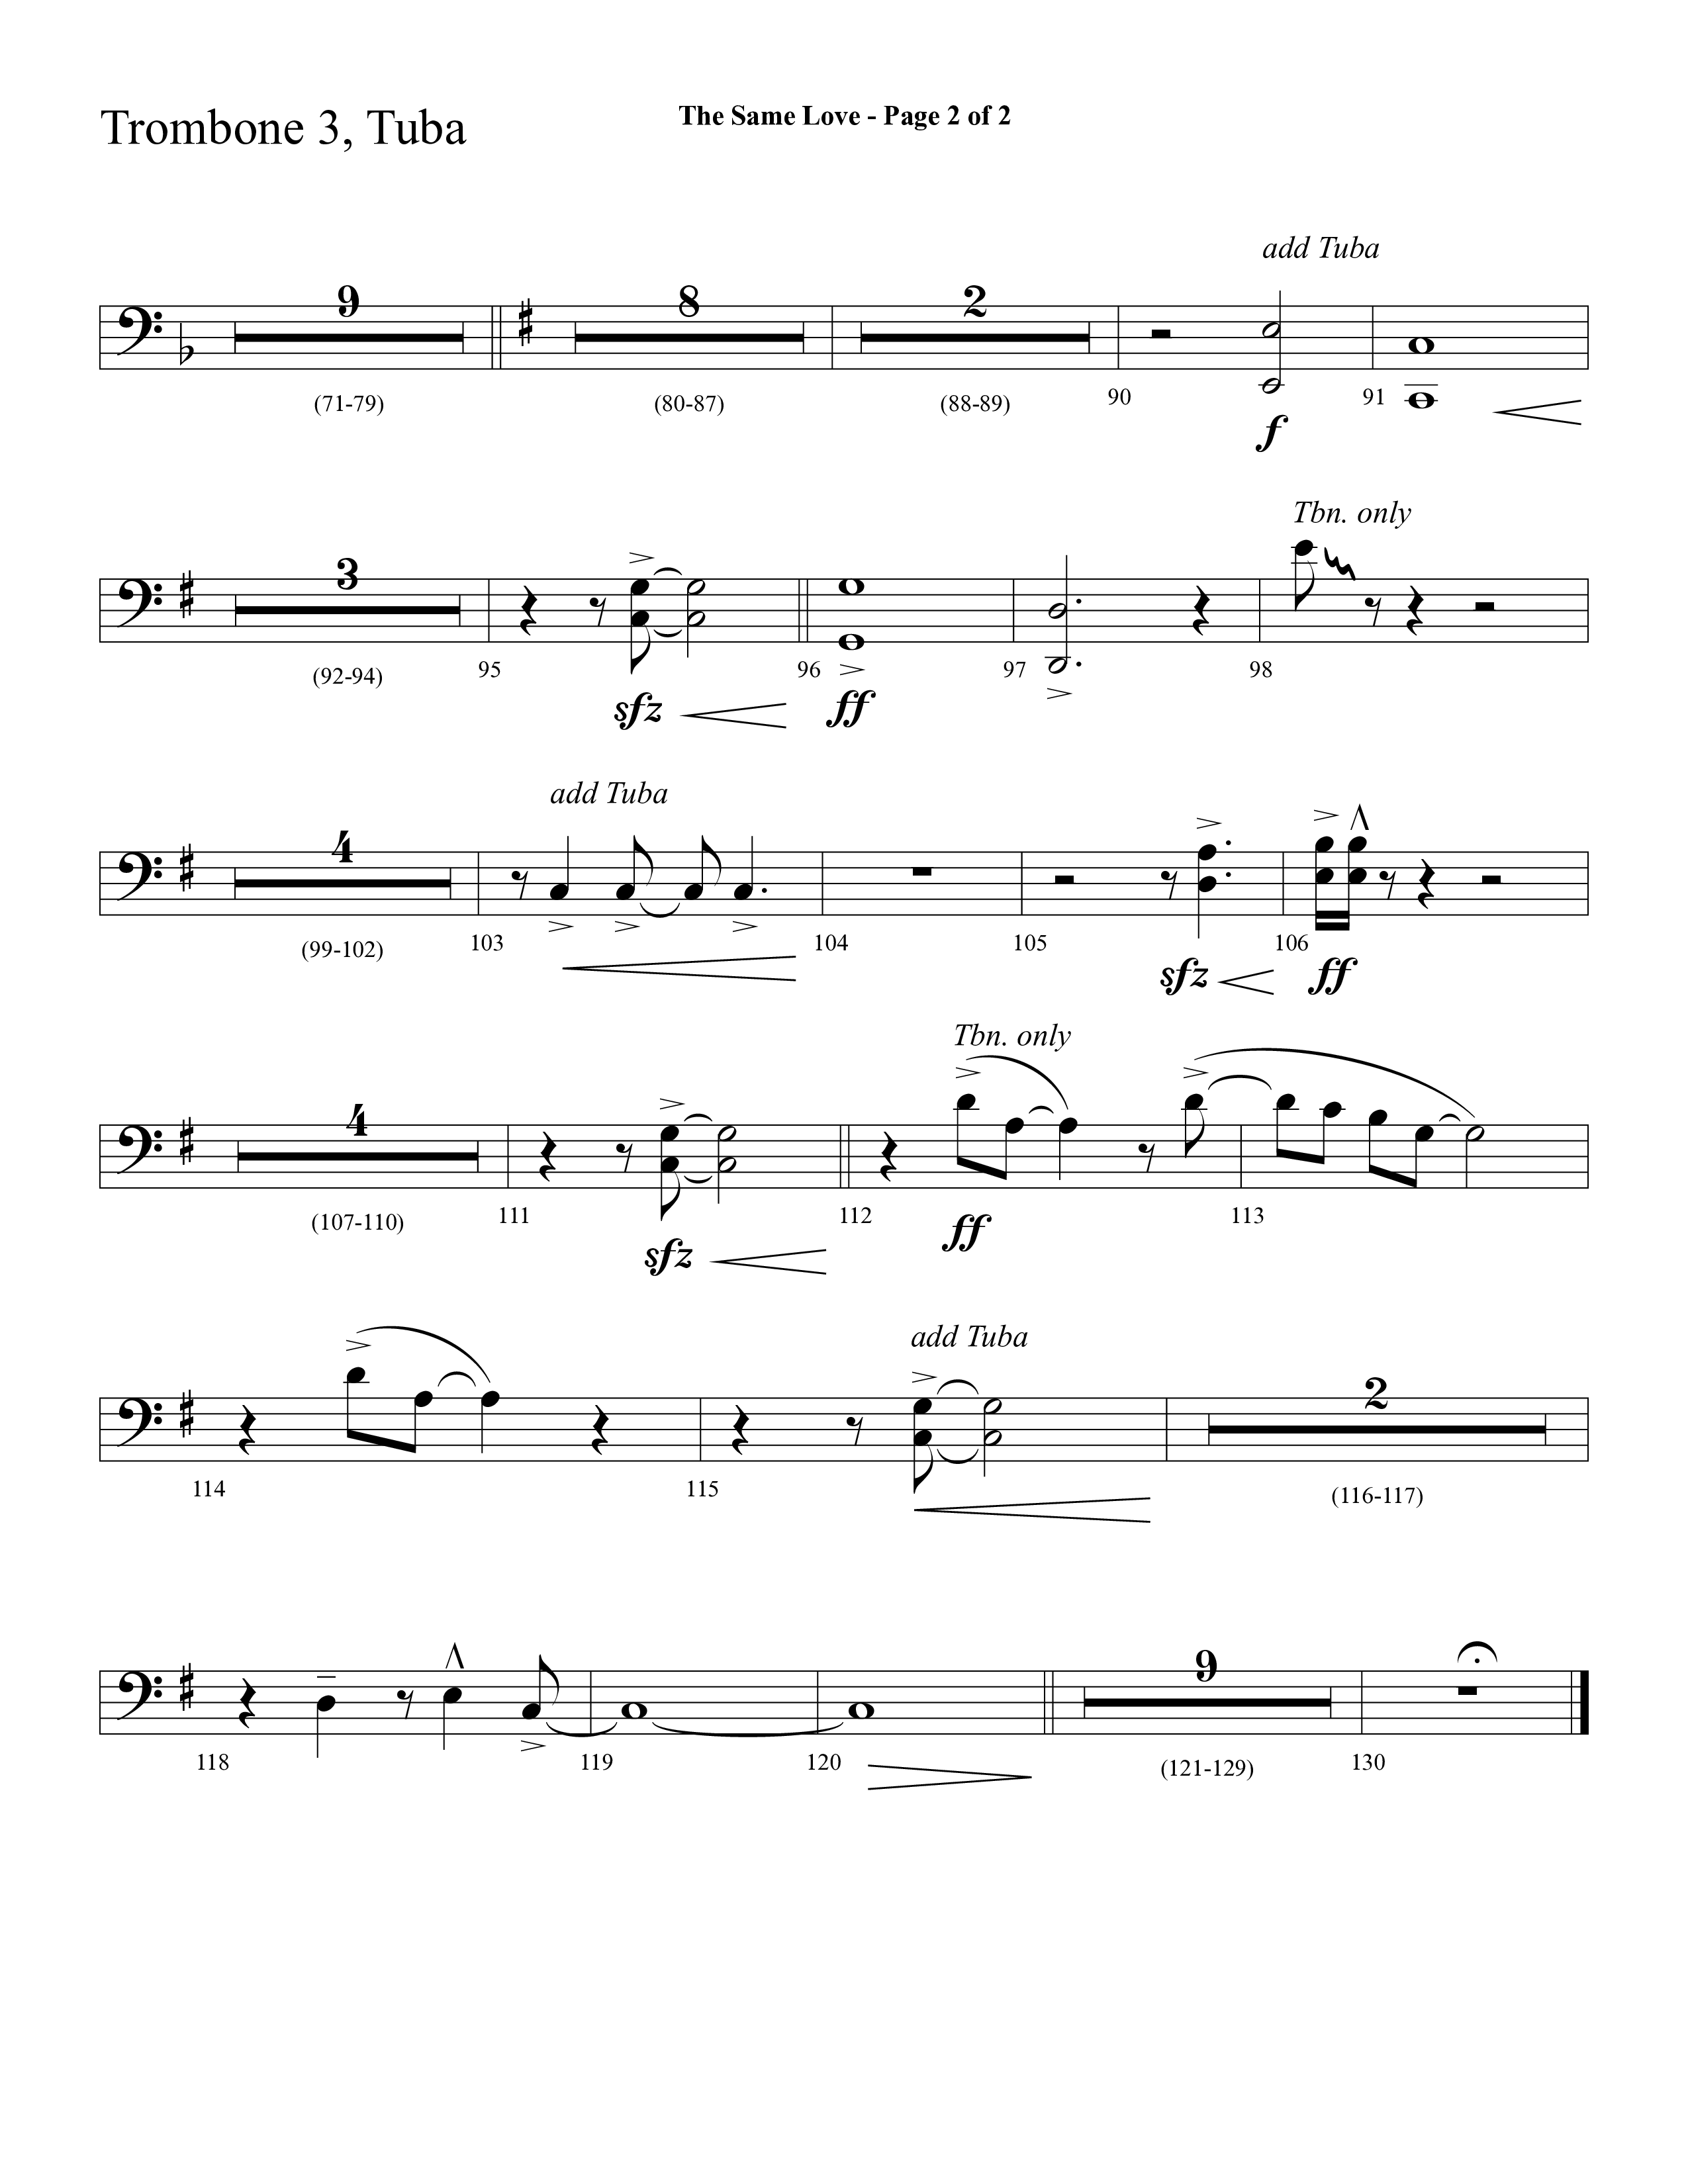 The Same Love (Choral Anthem SATB) Trombone 3/Tuba (Lifeway Choral / Arr. Cliff Duren)